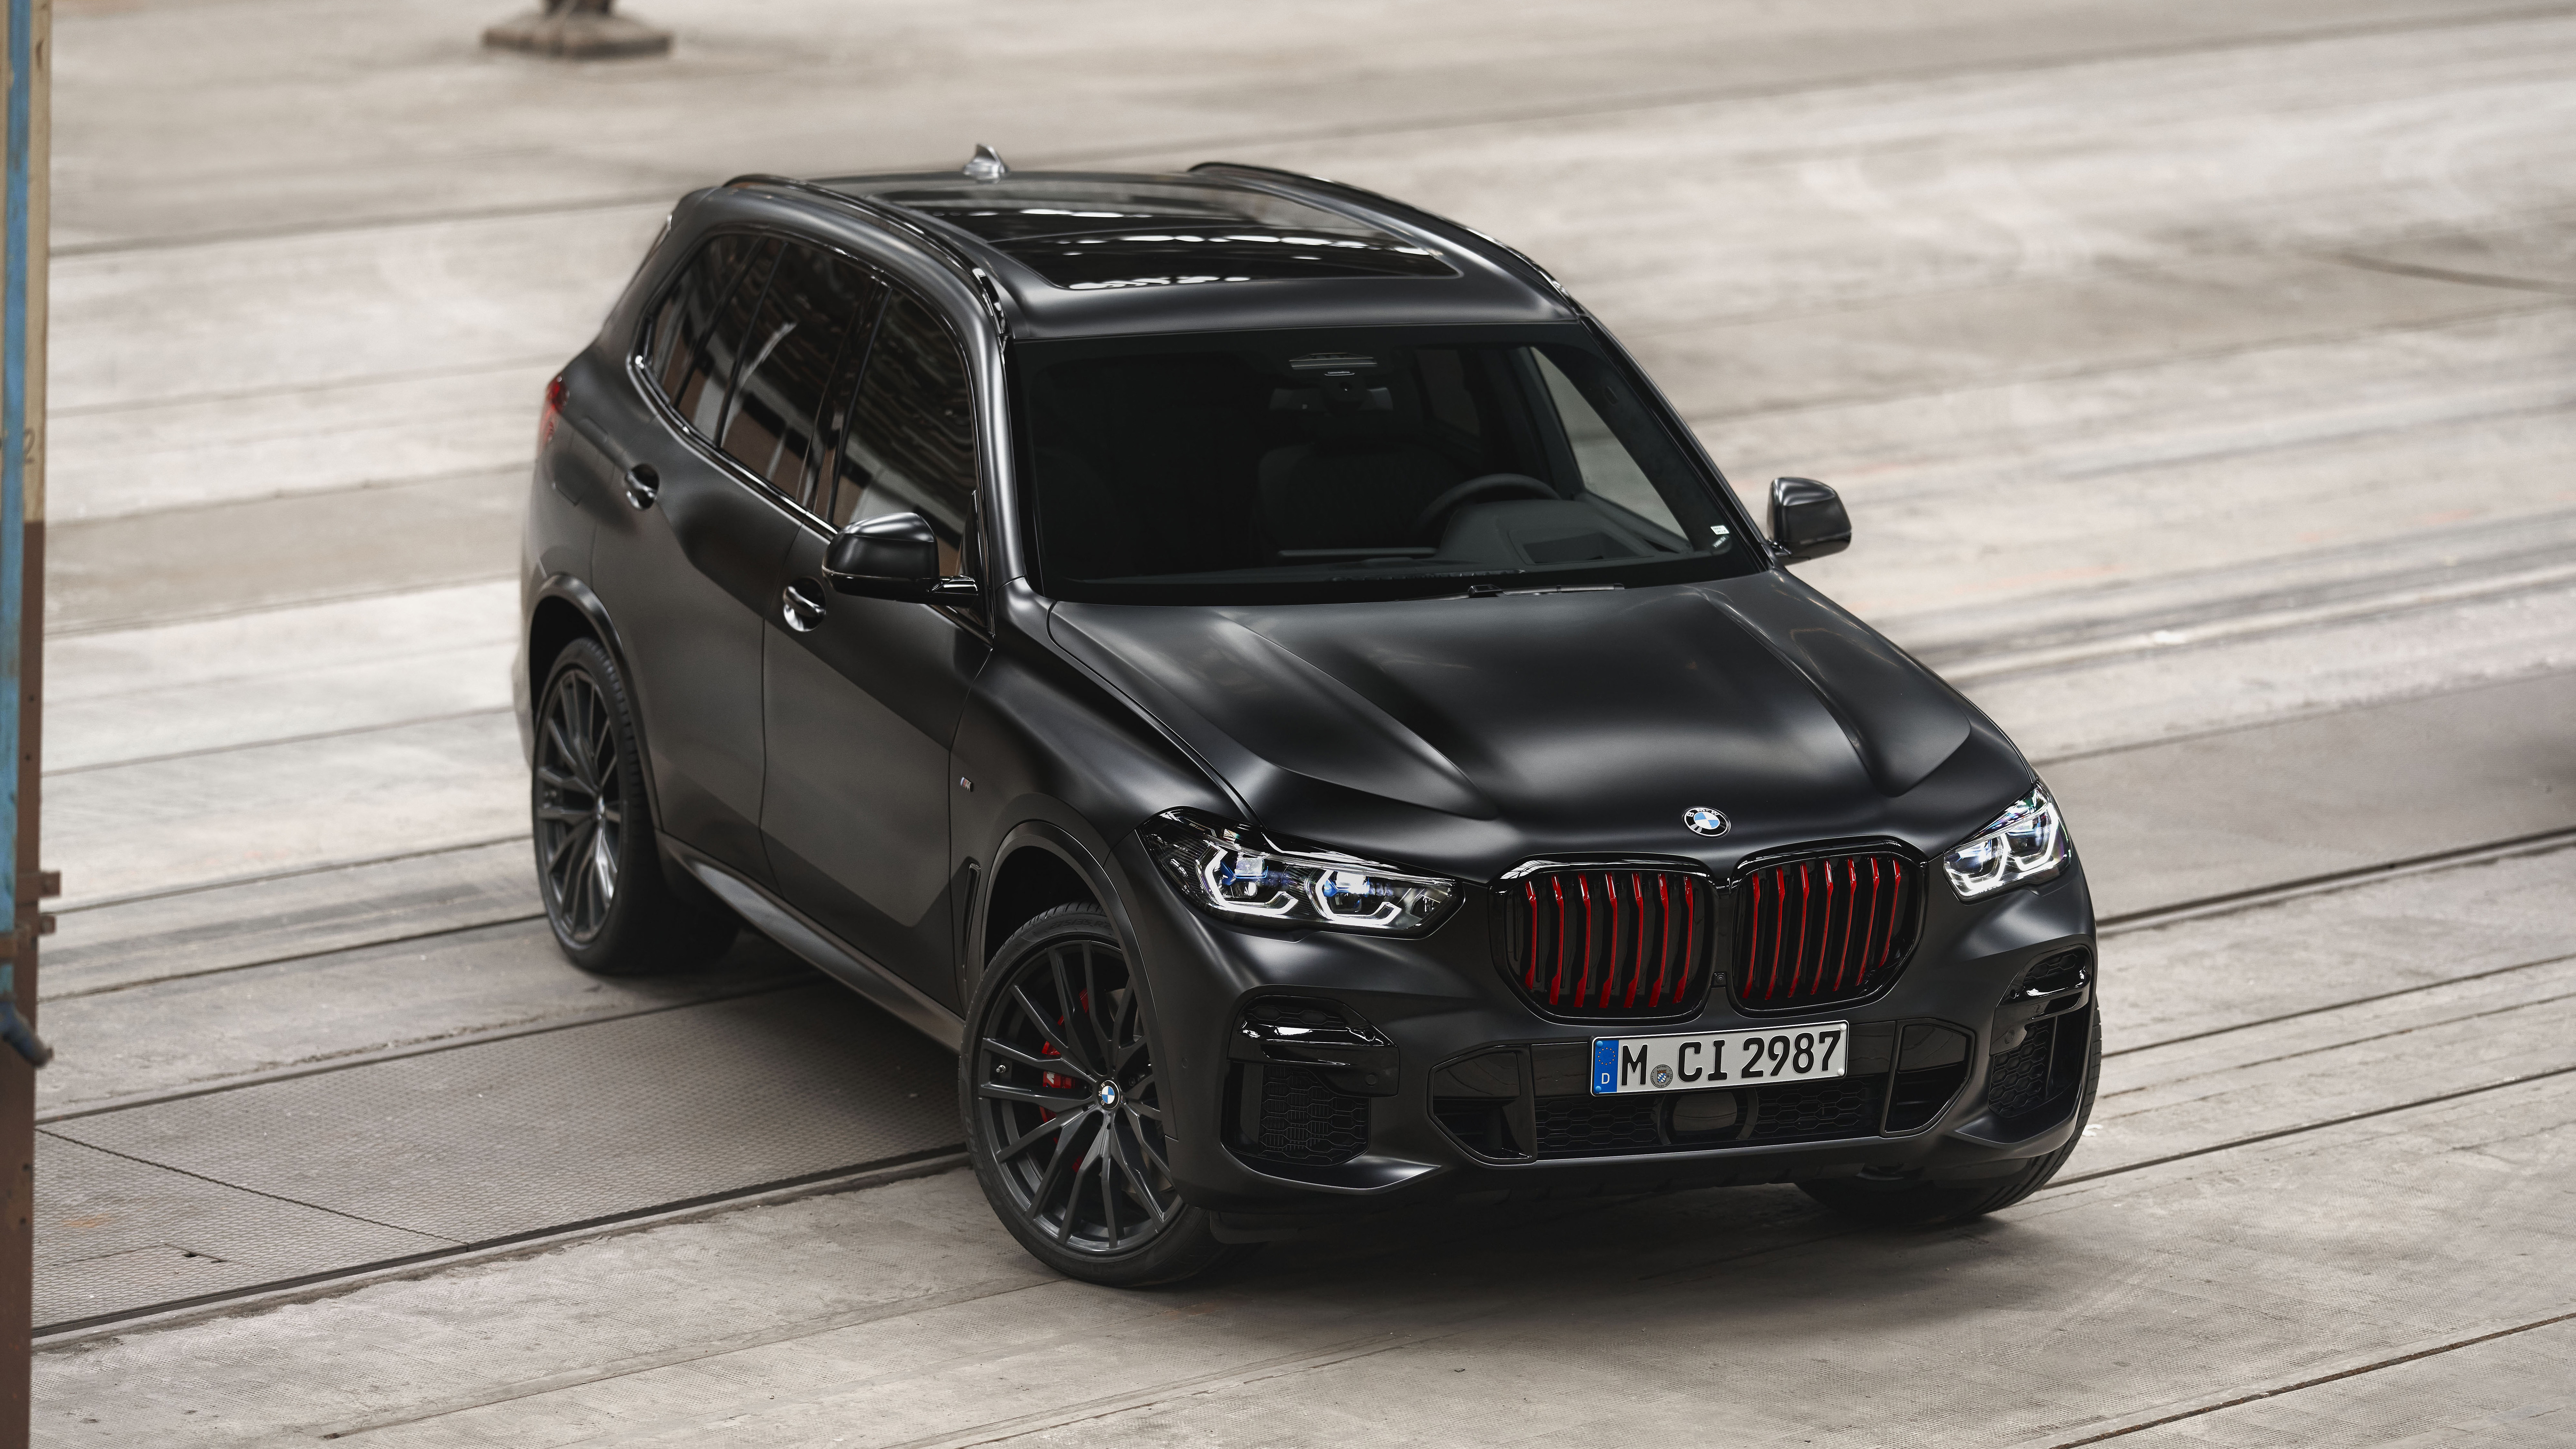 Bmw x5 черный. BMW x5 g05 Black Edition. БМВ х5 2022 черный. BMW x5m 2022. BMW x5m 2021 черный.